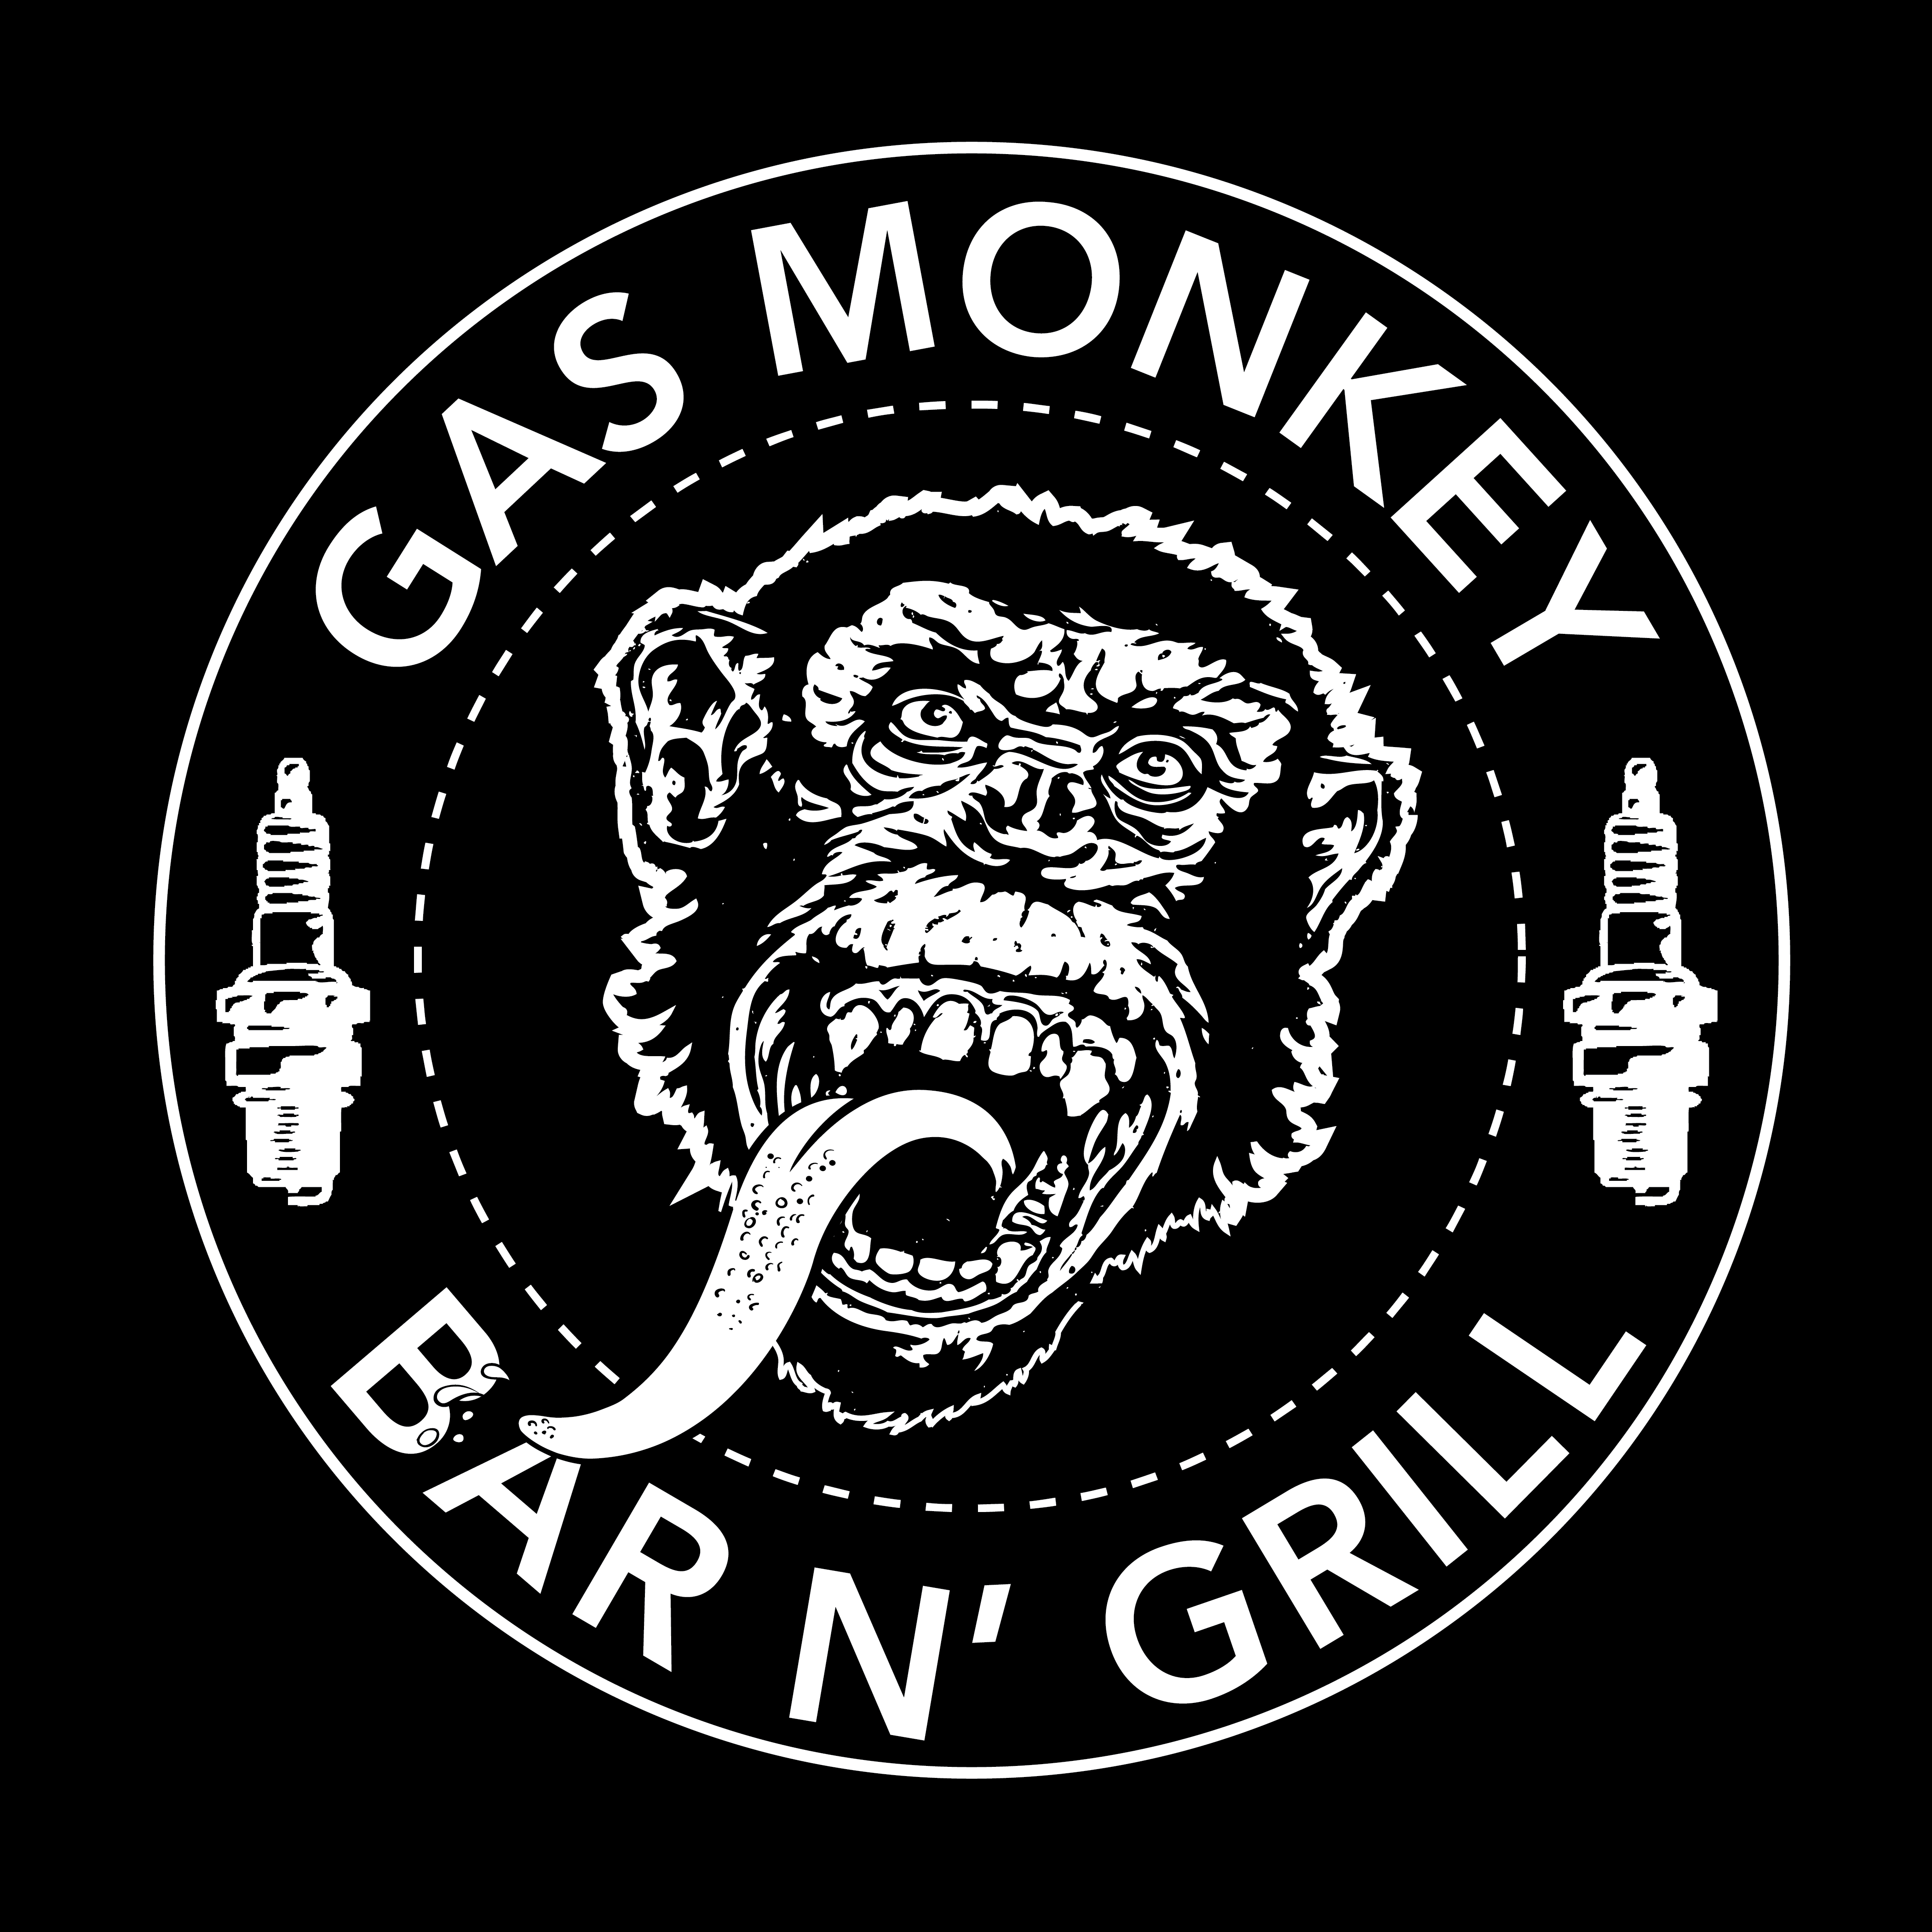 Gas Monkey Garage Vector Image For Log